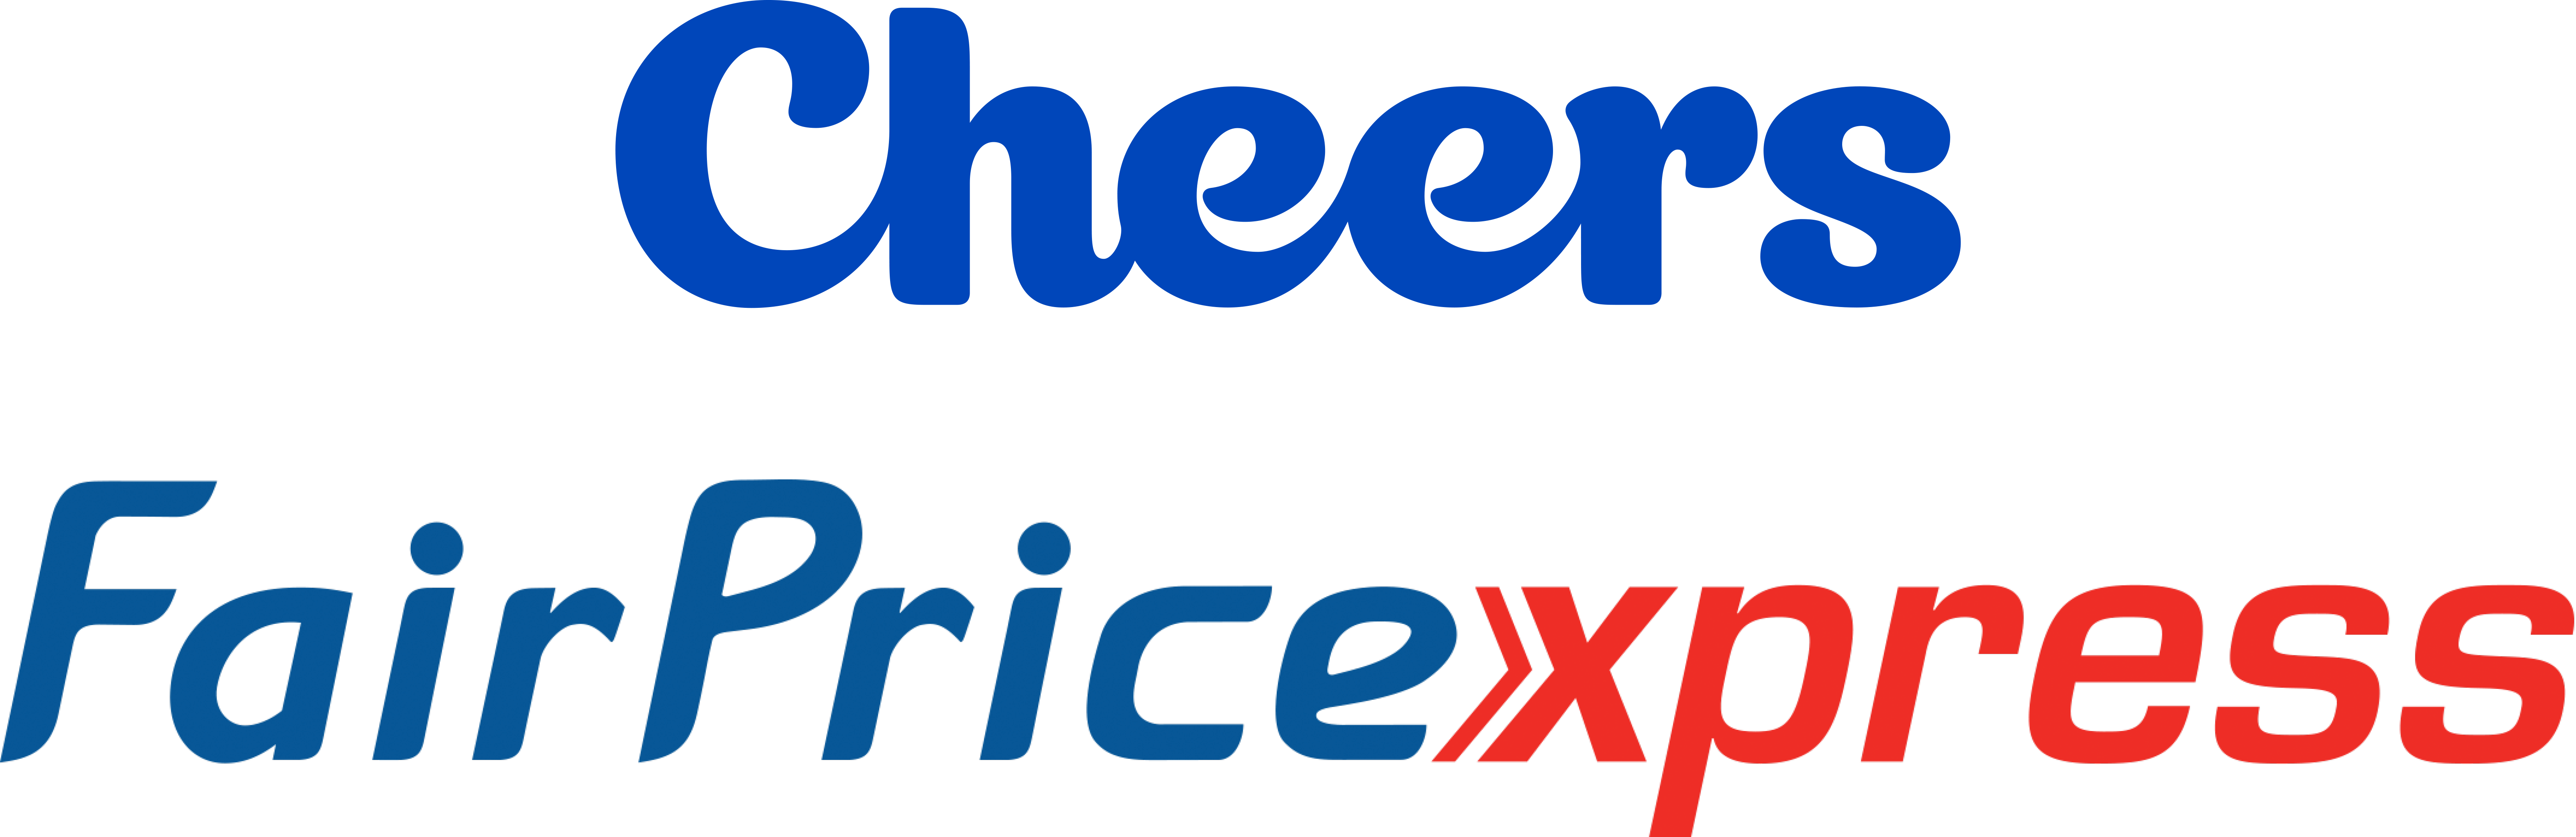 FairPricexpress logo